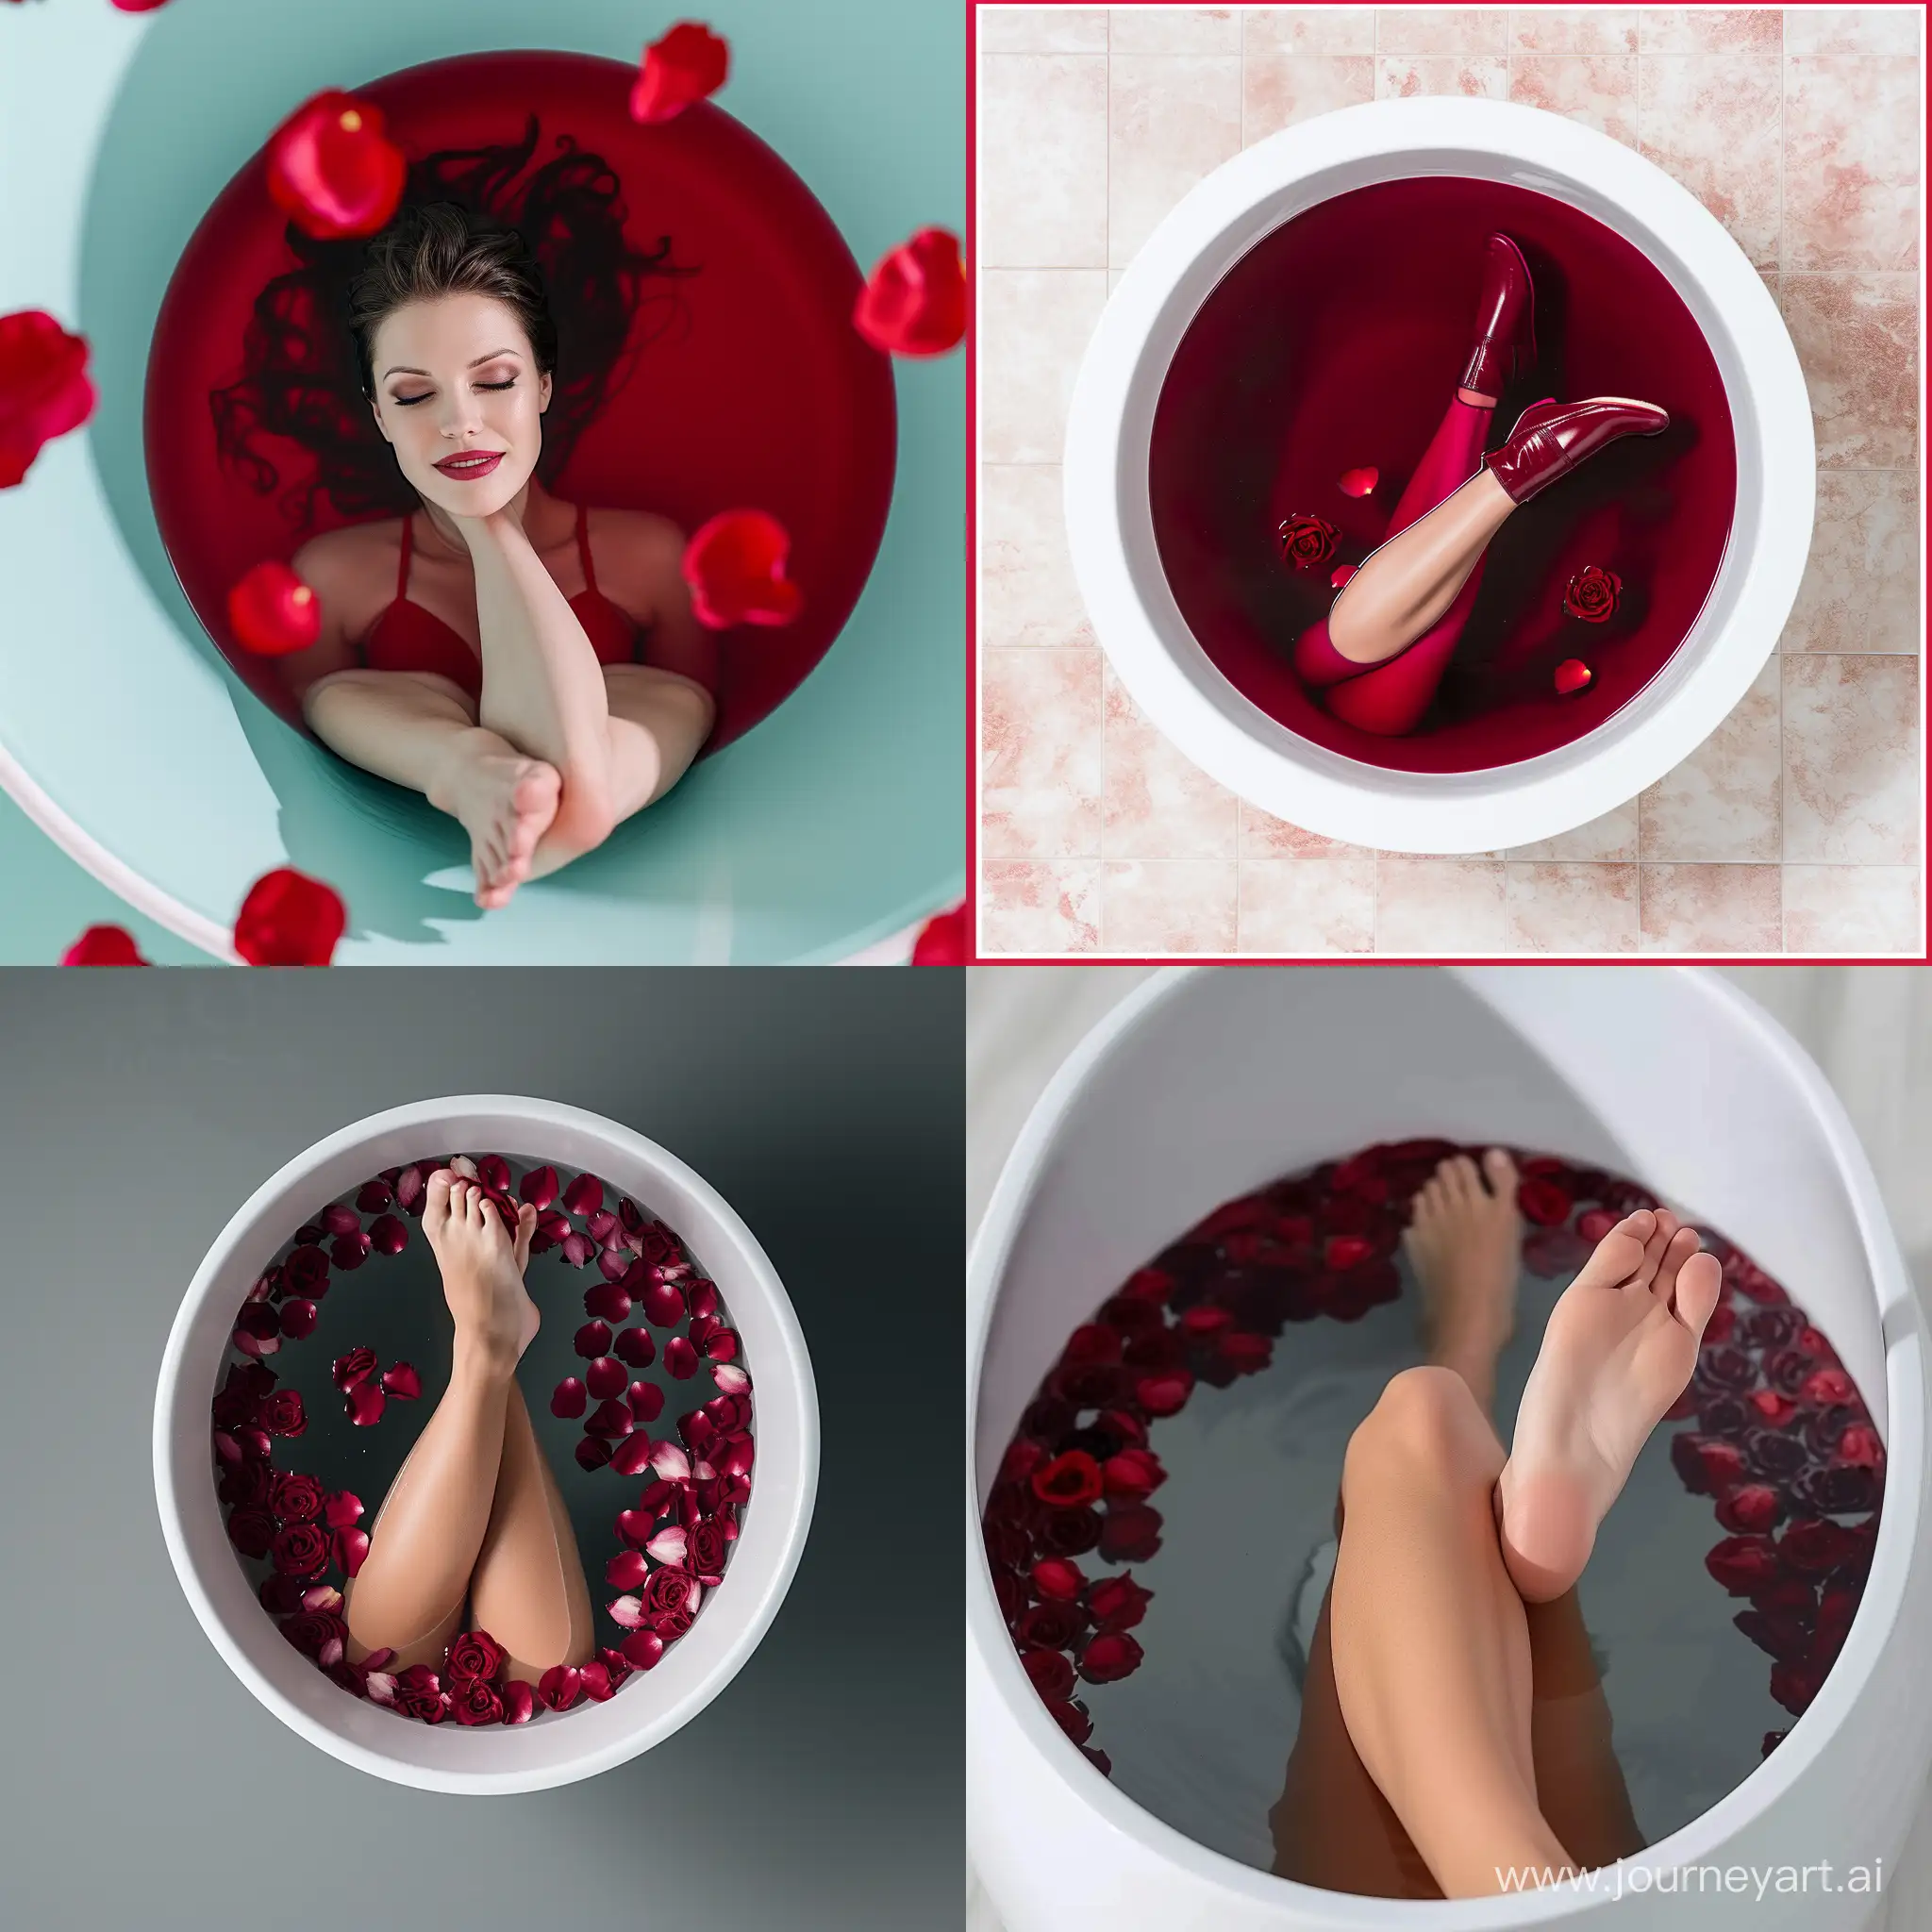 Brunette-Model-Relaxing-in-Modern-Porcelain-Bathtub-with-Rose-Petals